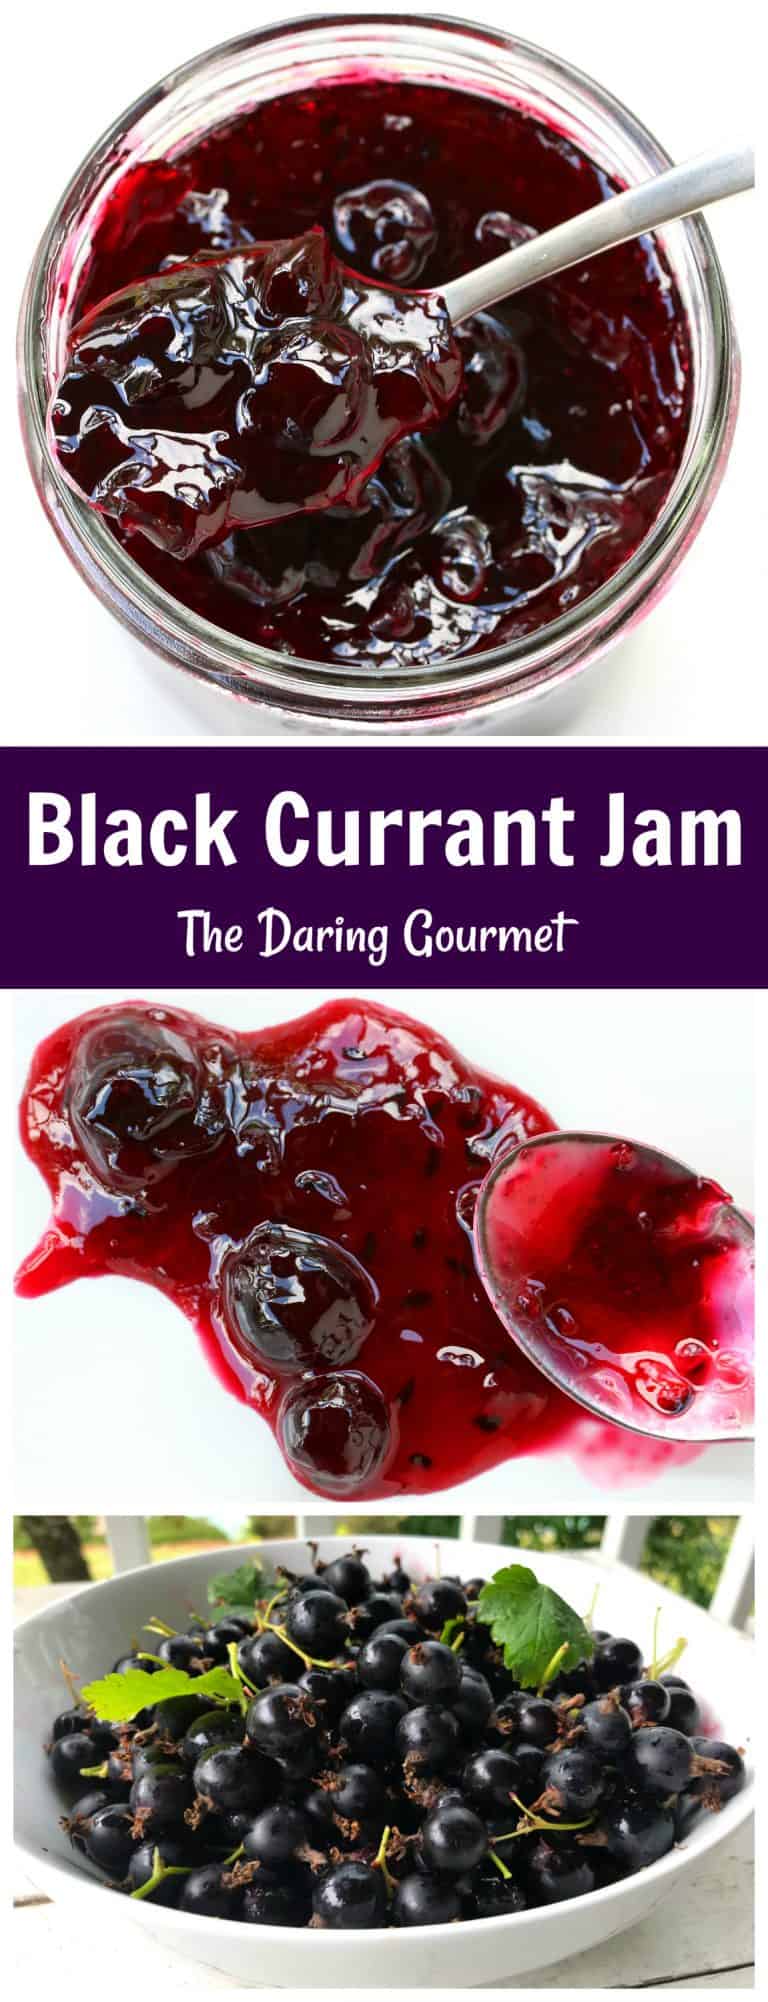 Black Currant Jam The Daring Gourmet